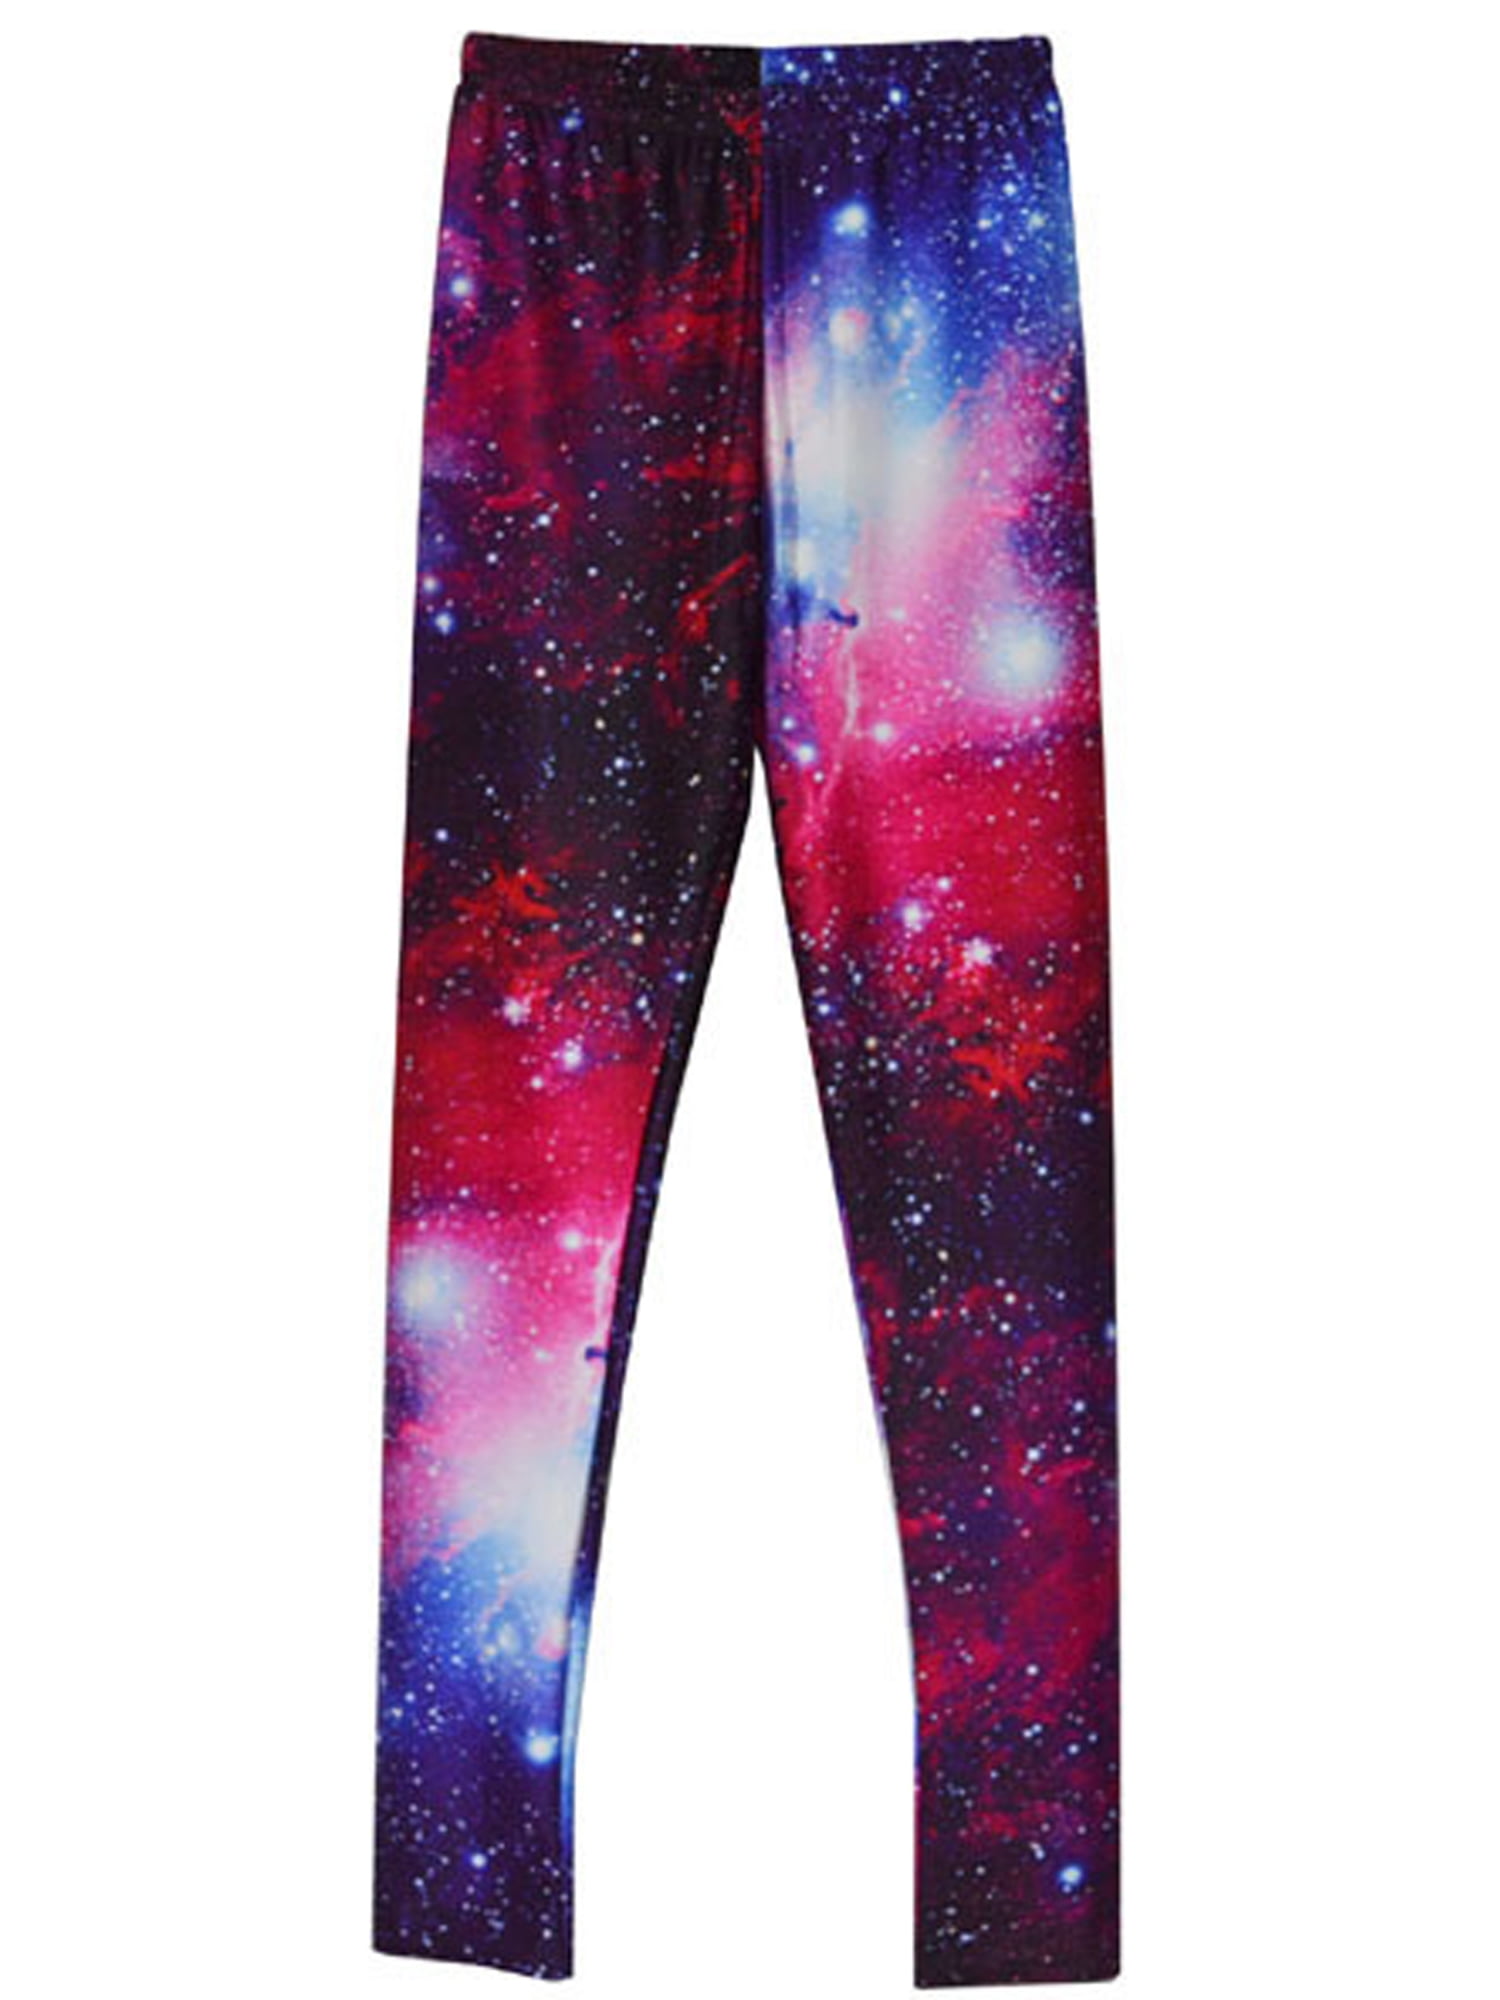 KIUTWRR Leggings Hot Fashion Women Space print Pants Galaxy